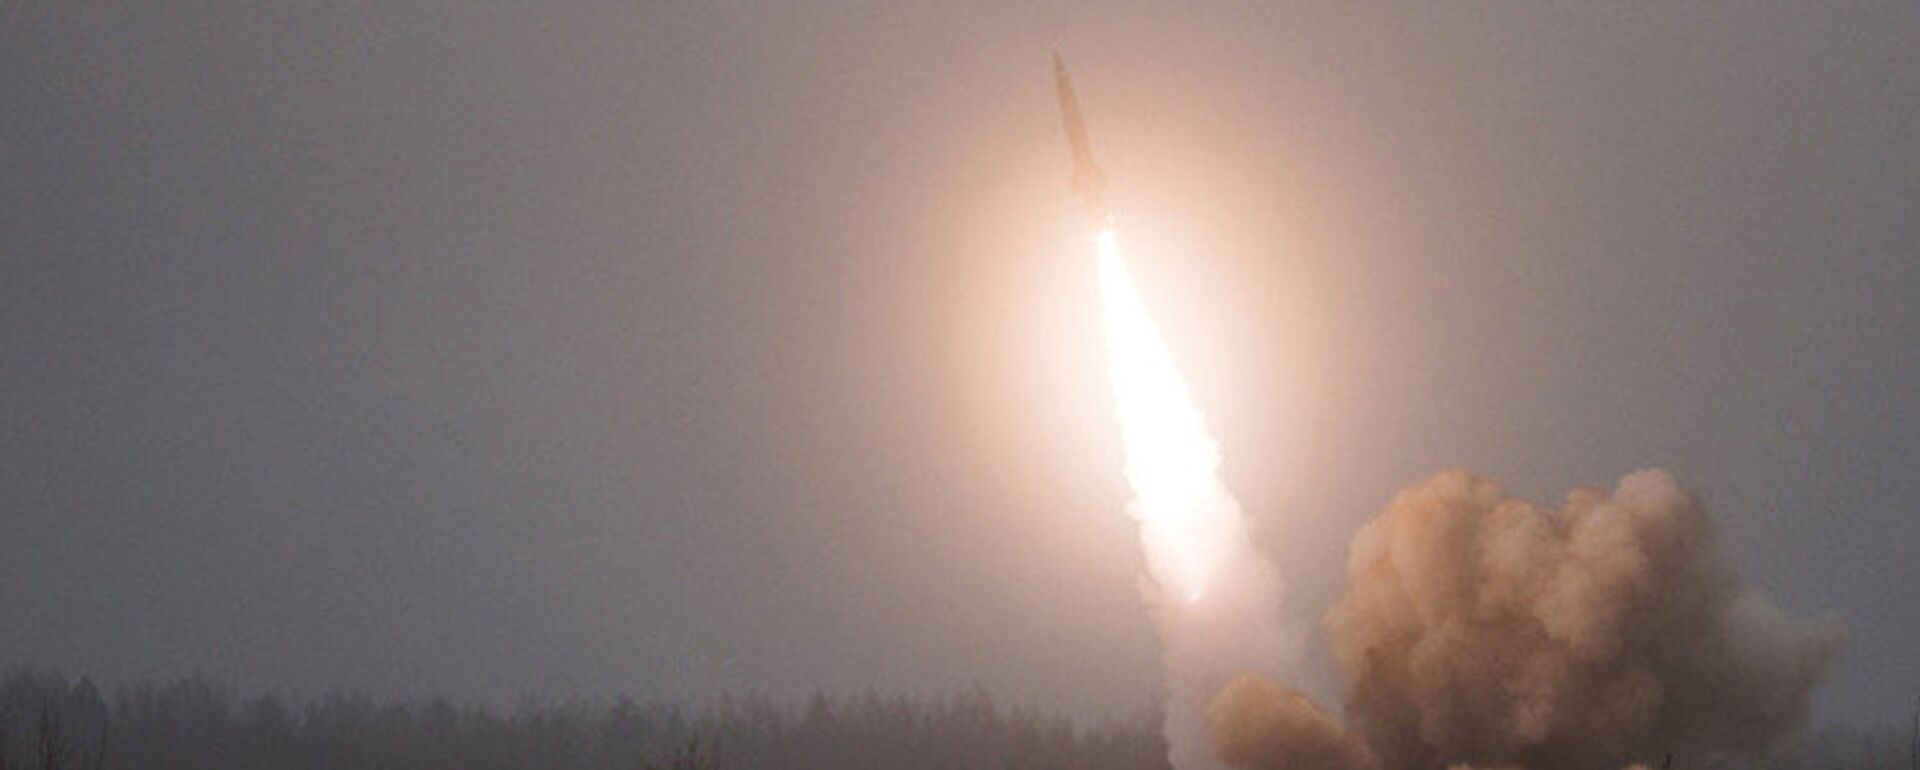 روسيا تختبر صاروخ تسيركون  - سبوتنيك عربي, 1920, 08.01.2023